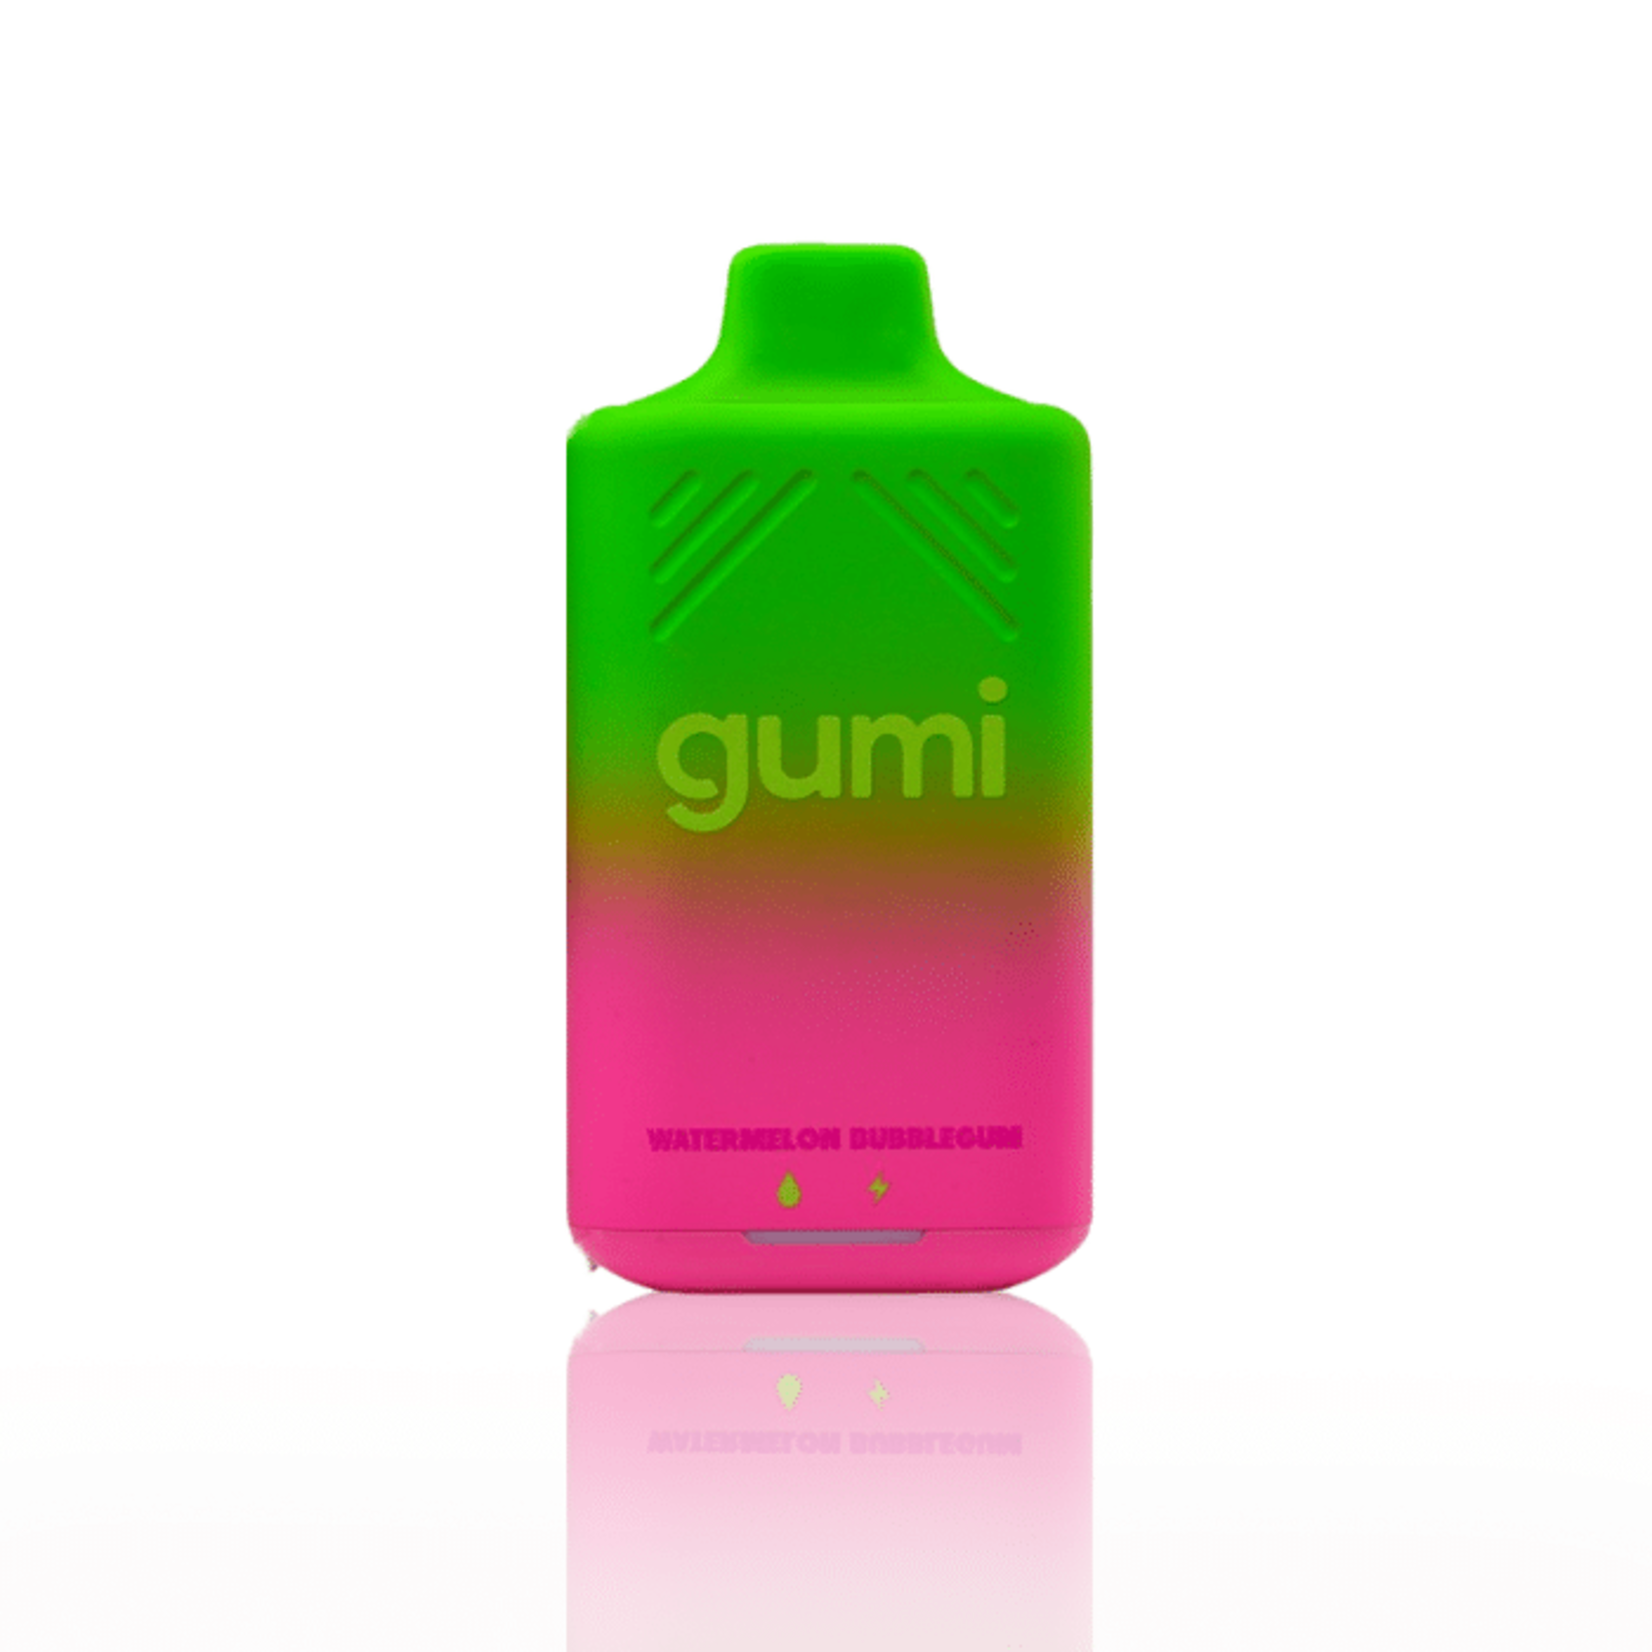 Gumi Bar 8000 Puff Disposable